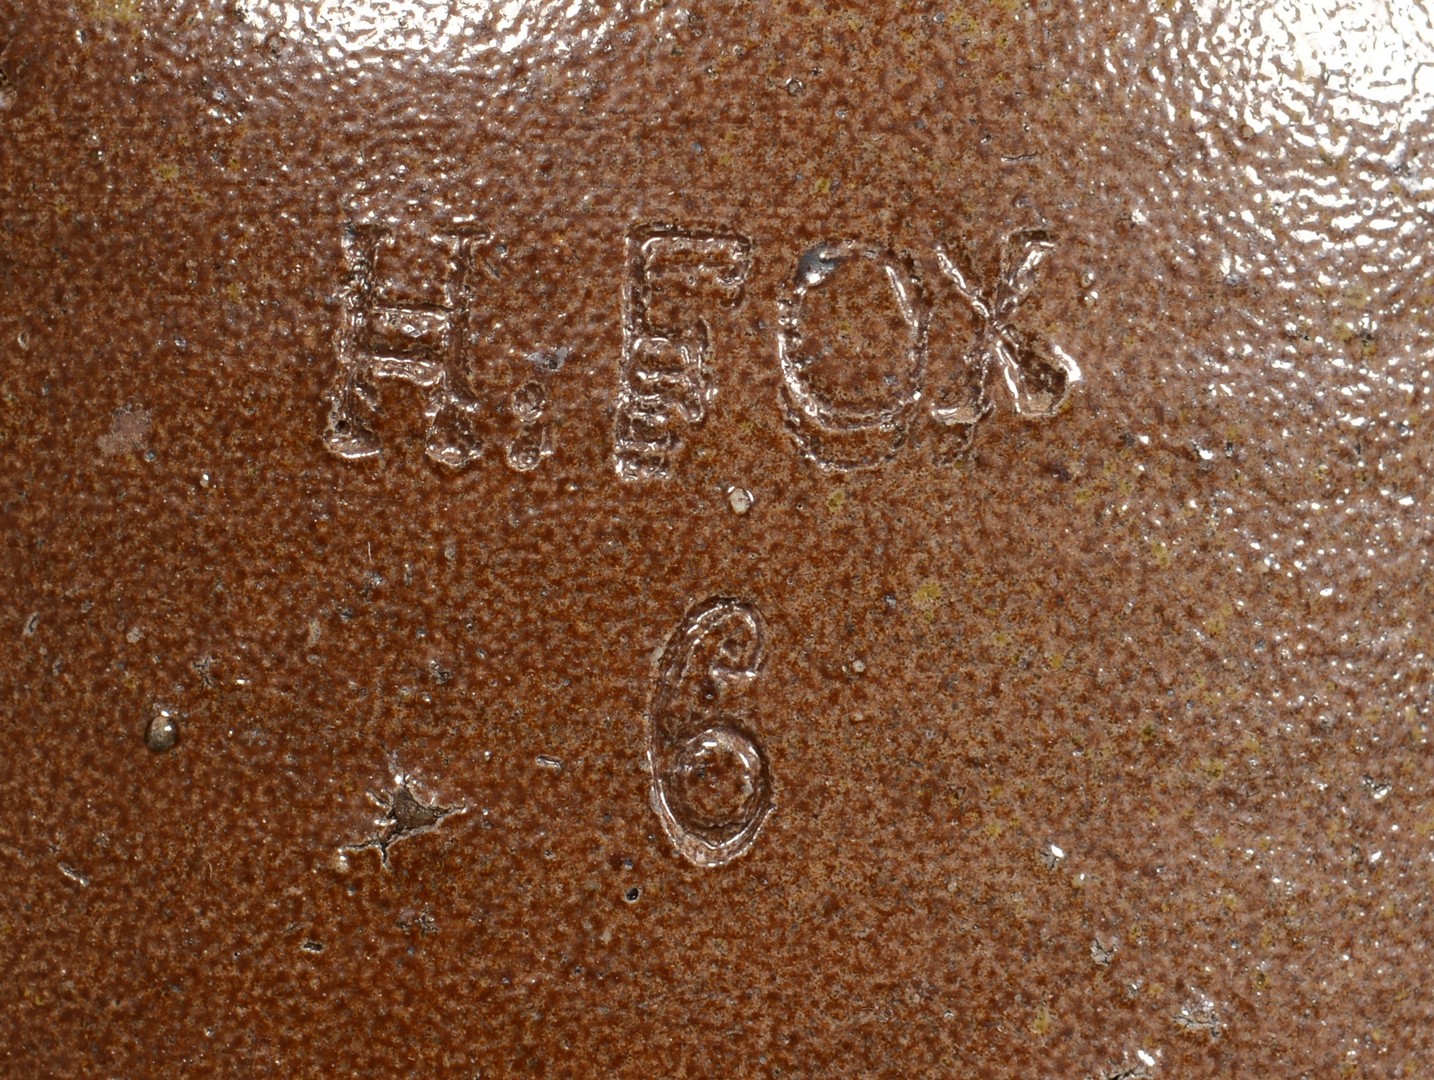 Lot 155: 2 NC Stoneware Jars, Himer Fox